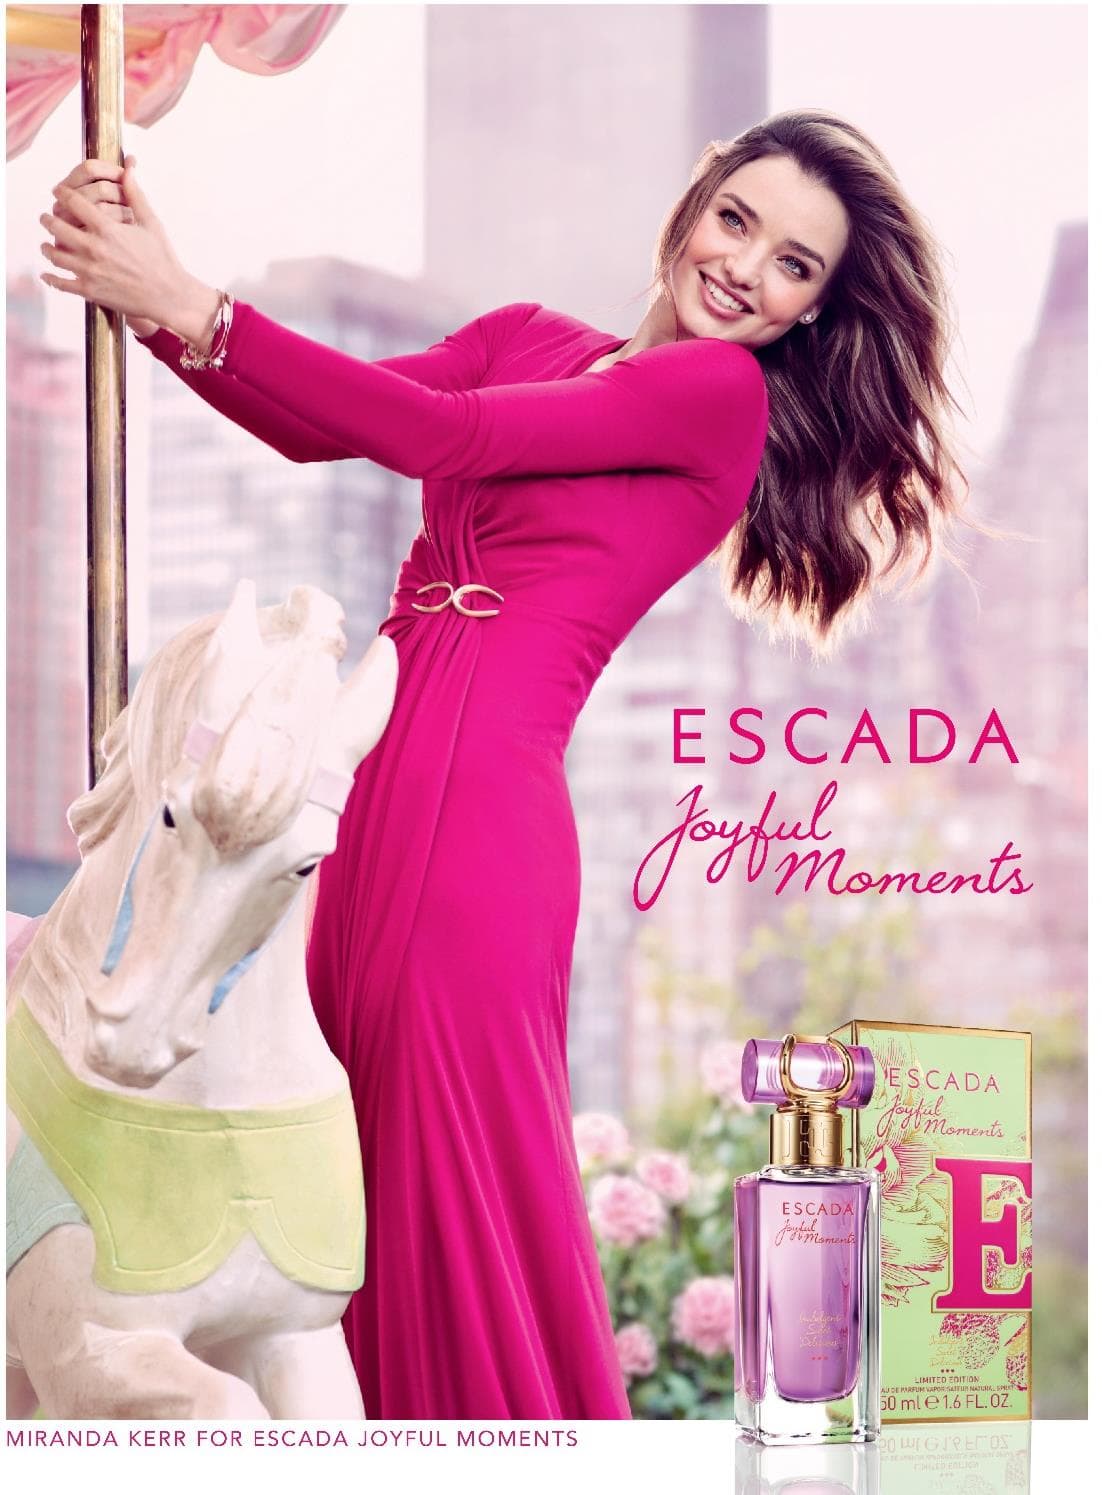 Escada Joyful Moments Limited Edition